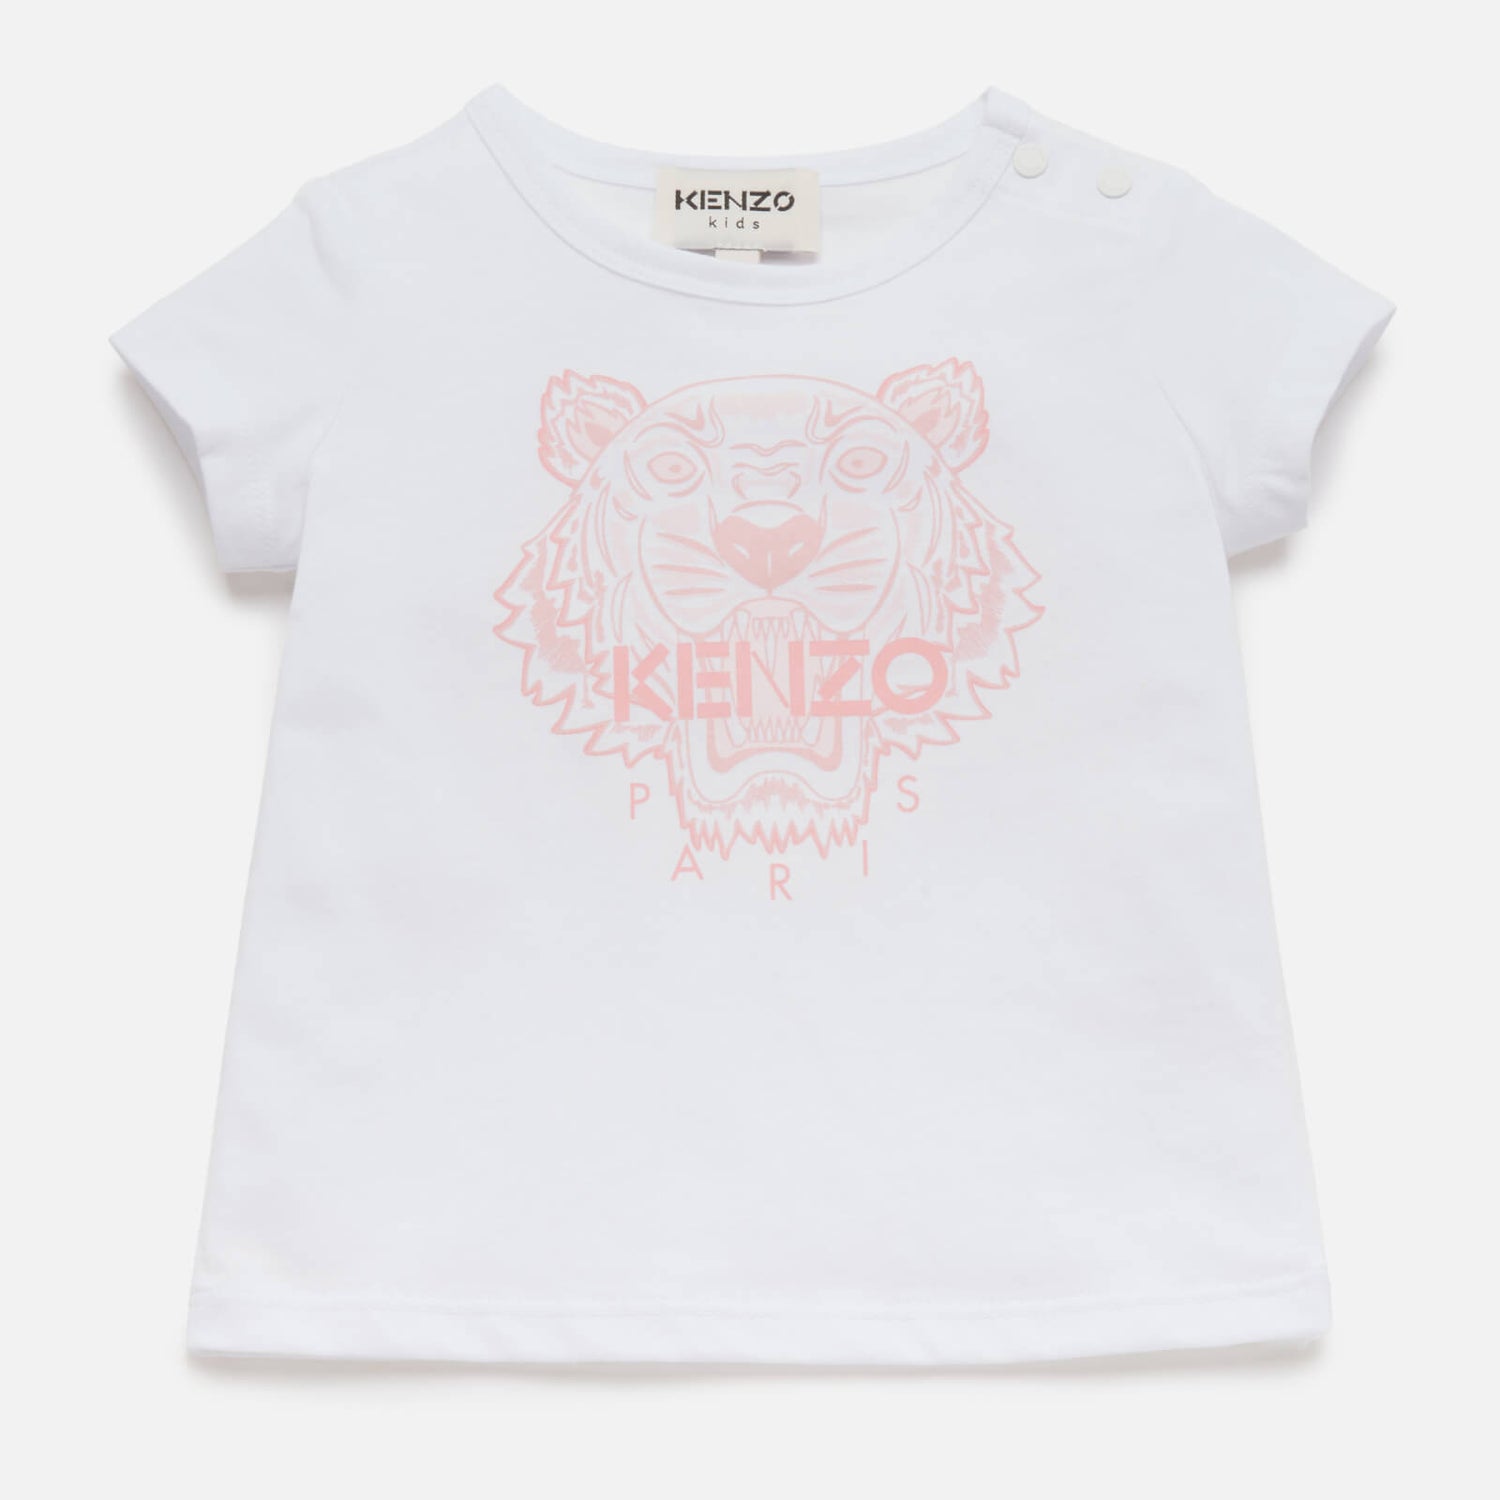 KENZO Toddlers' Tiger T-Shirt - Pink/Optic White - 6 - 9 Months